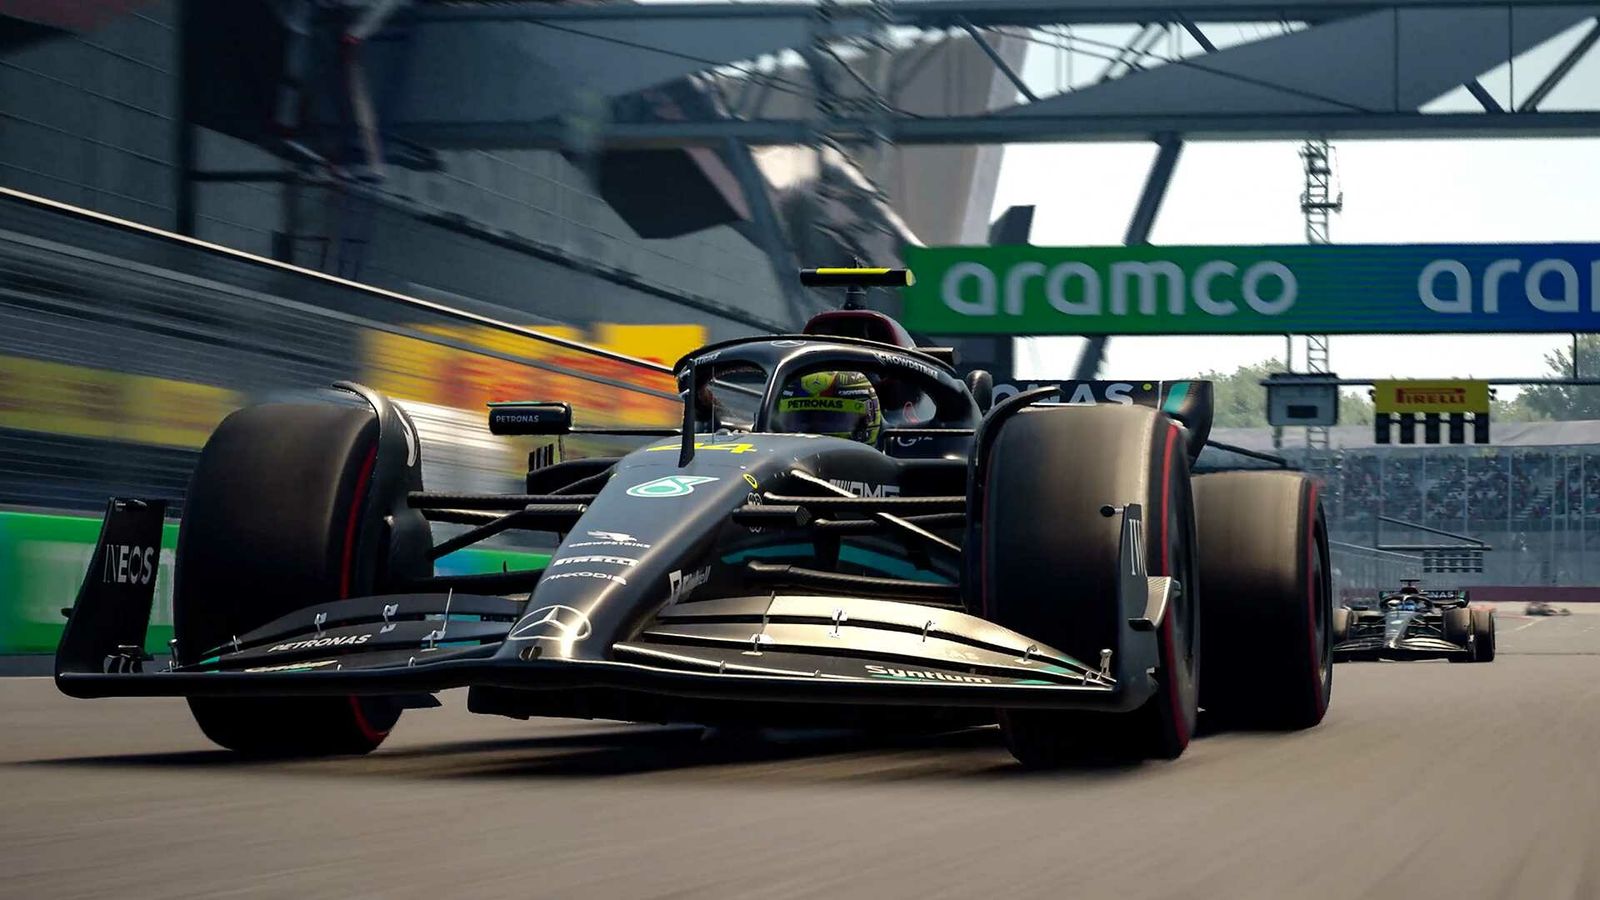 A black Mercedes F1 car on a track.